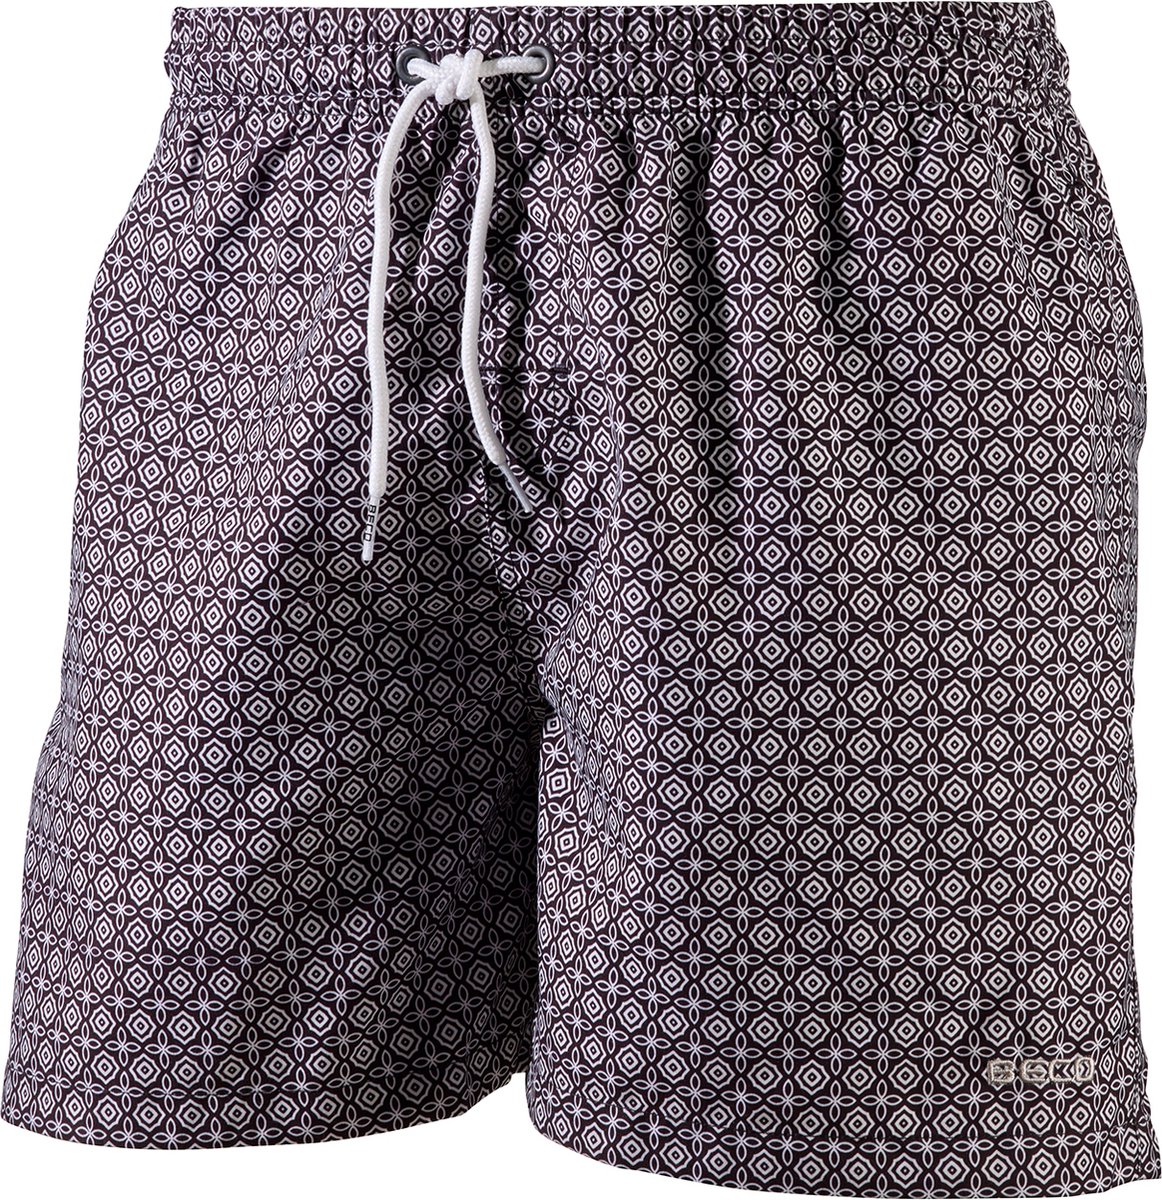 BECO shorts, binnenbroekje, elastische band, lengte 42 cm, 3 zakjes, zwart, maat 2XL